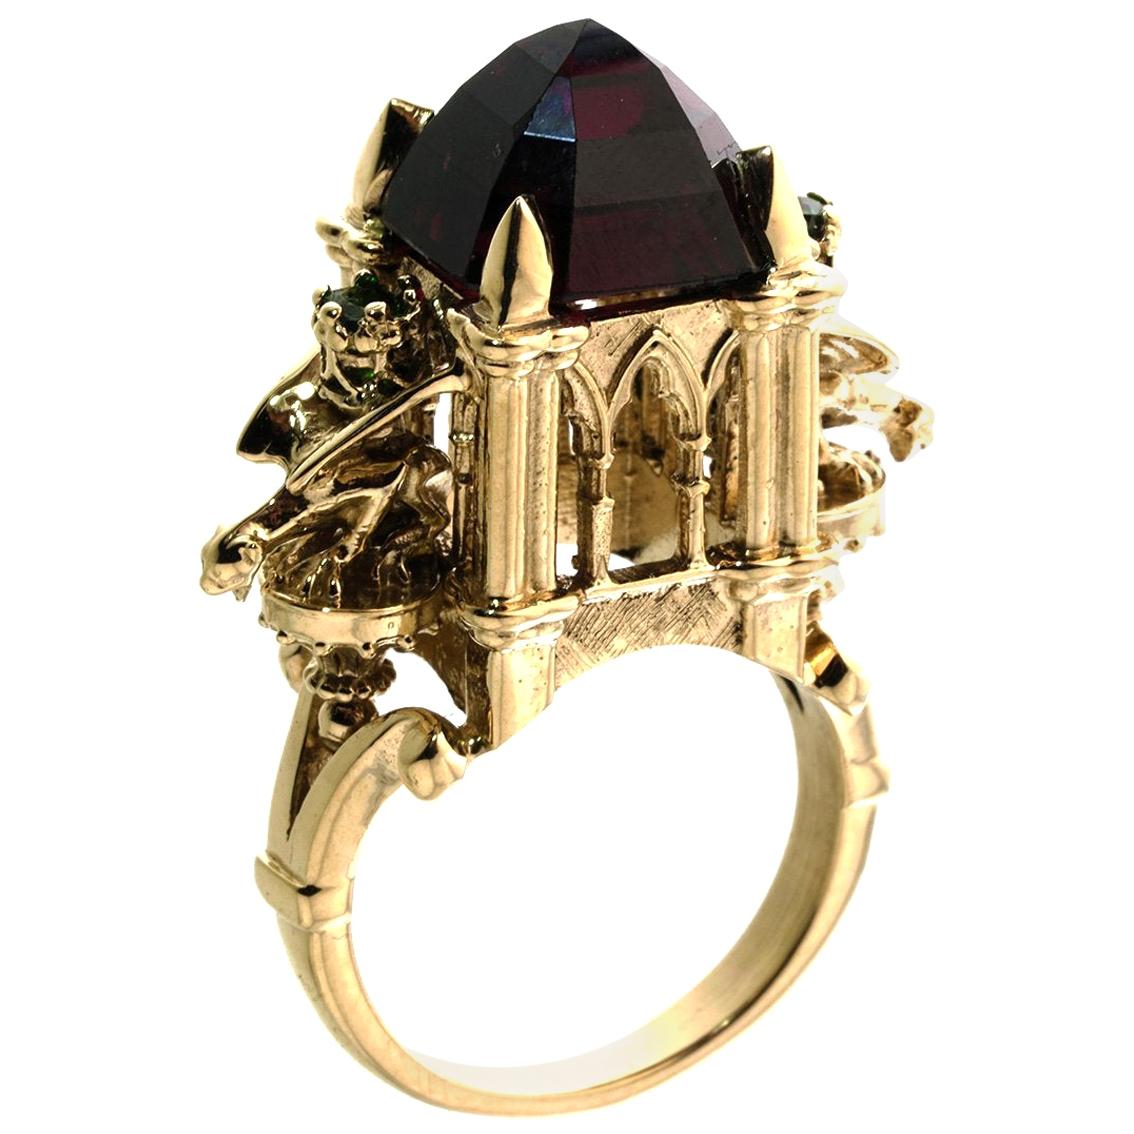 9ct Gold Rhodolite Garnet Cathedral Ring Gothic Victorian Style with Gargoyles